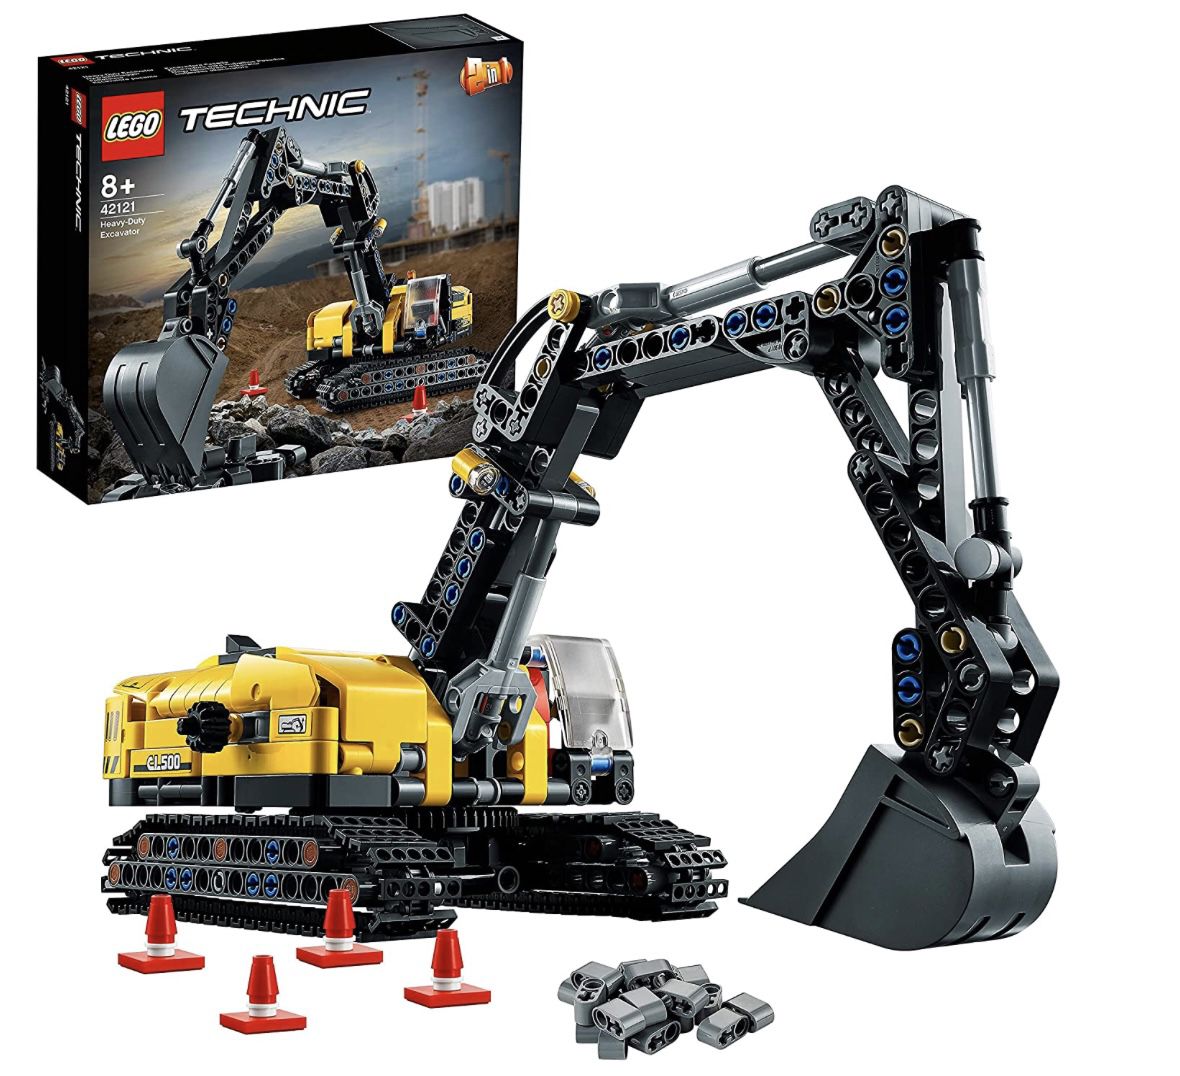 LEGO 42121 Technic Hydraulikbagger   Traktor 2 in 1 Modell für 22,23€ (statt 31€)